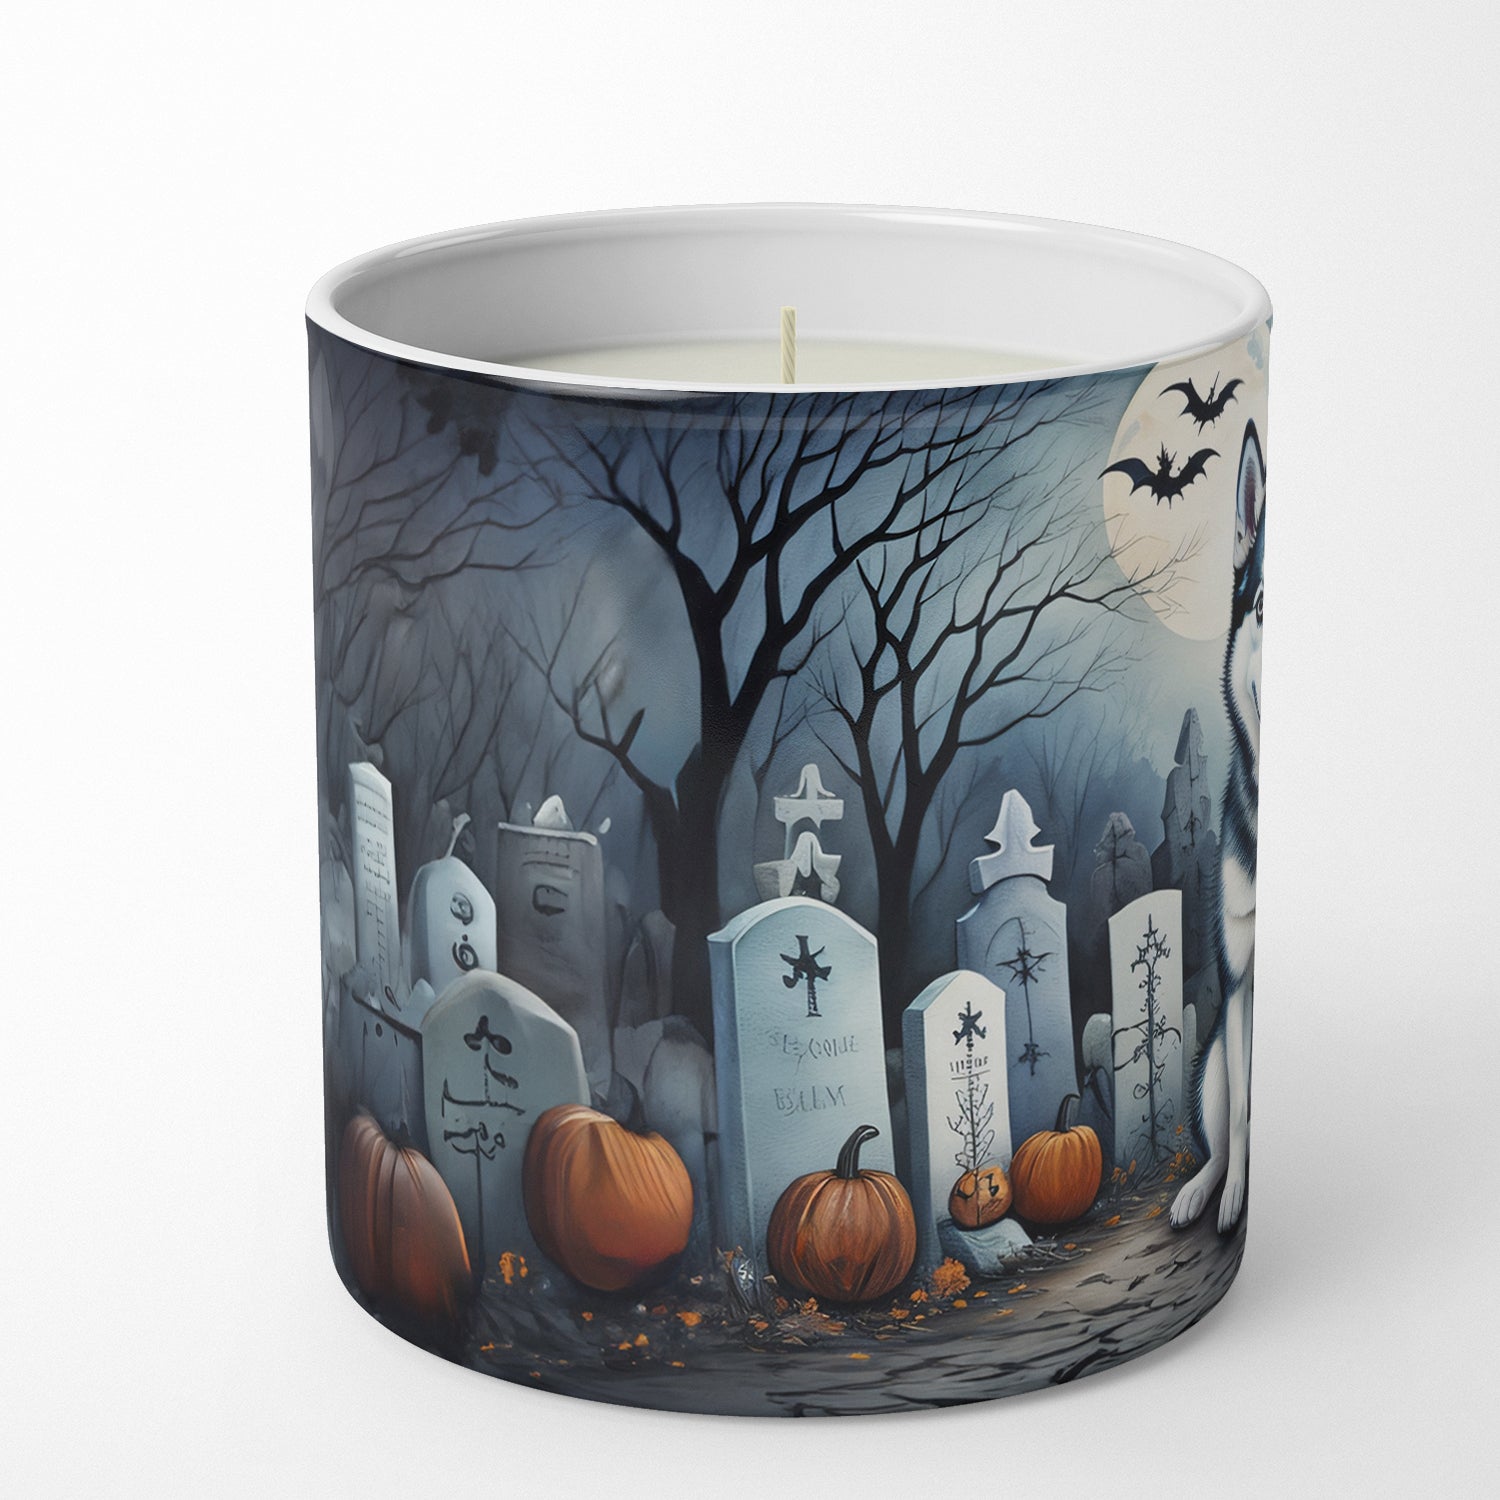 Siberian Husky Spooky Halloween Decorative Soy Candle